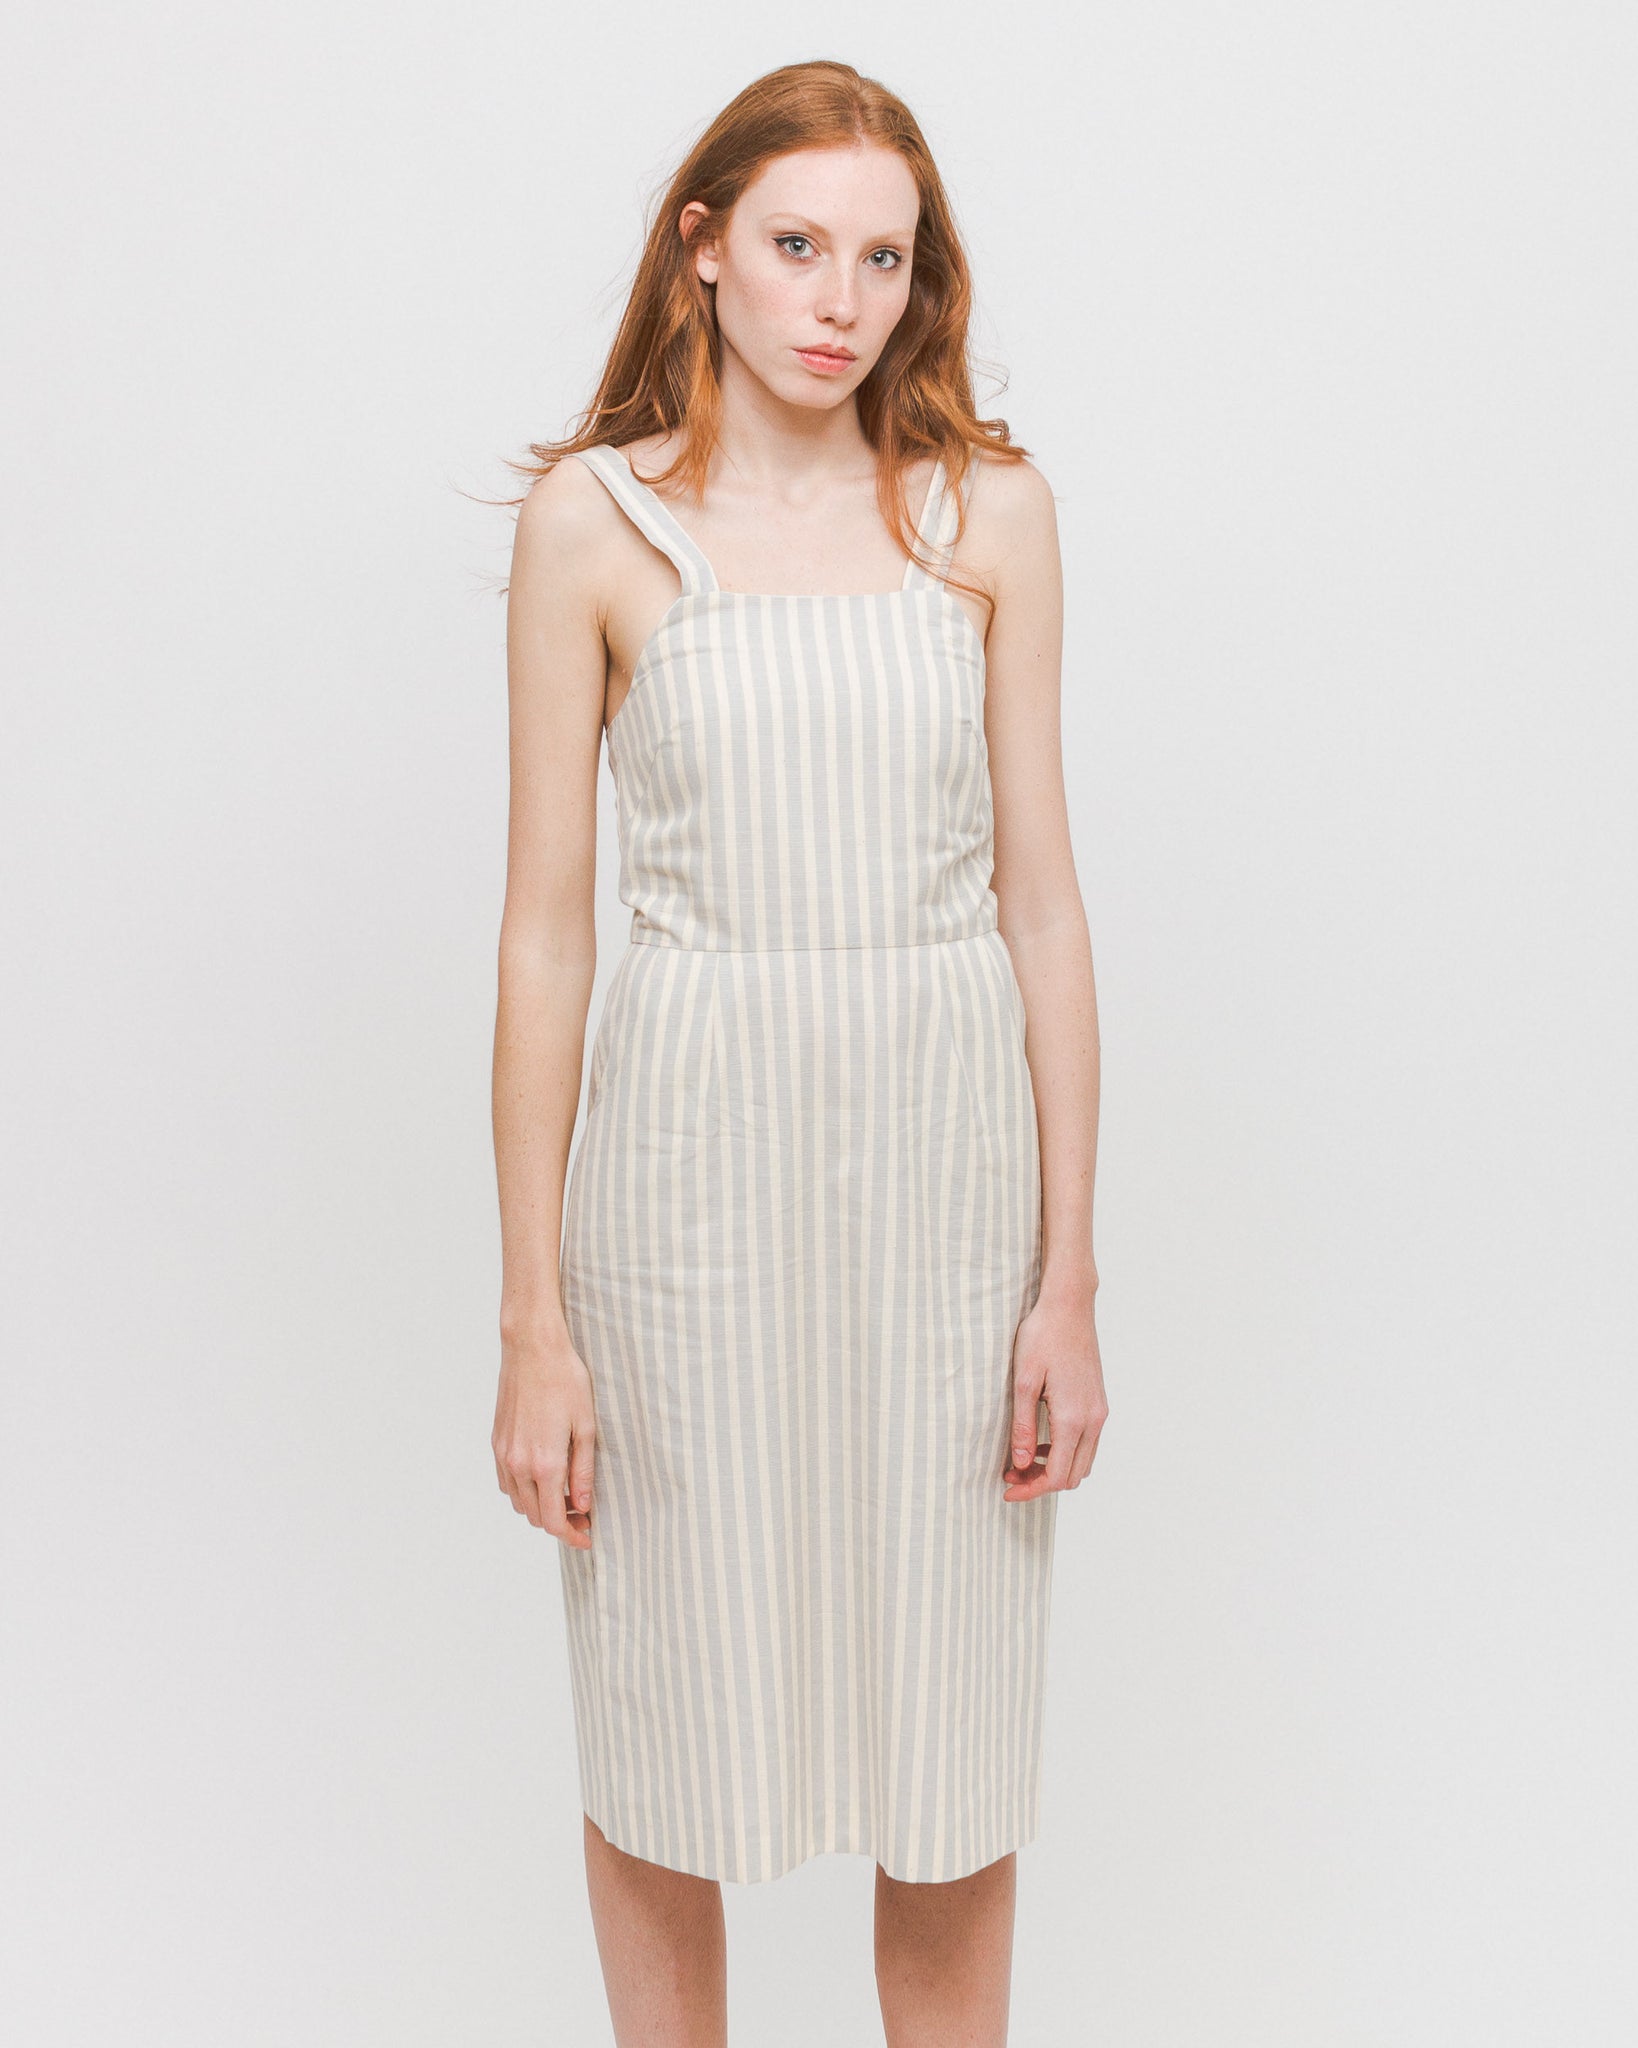 Diarte | Vestido Cesar - Grey Stripes | Trait Store Barcelona